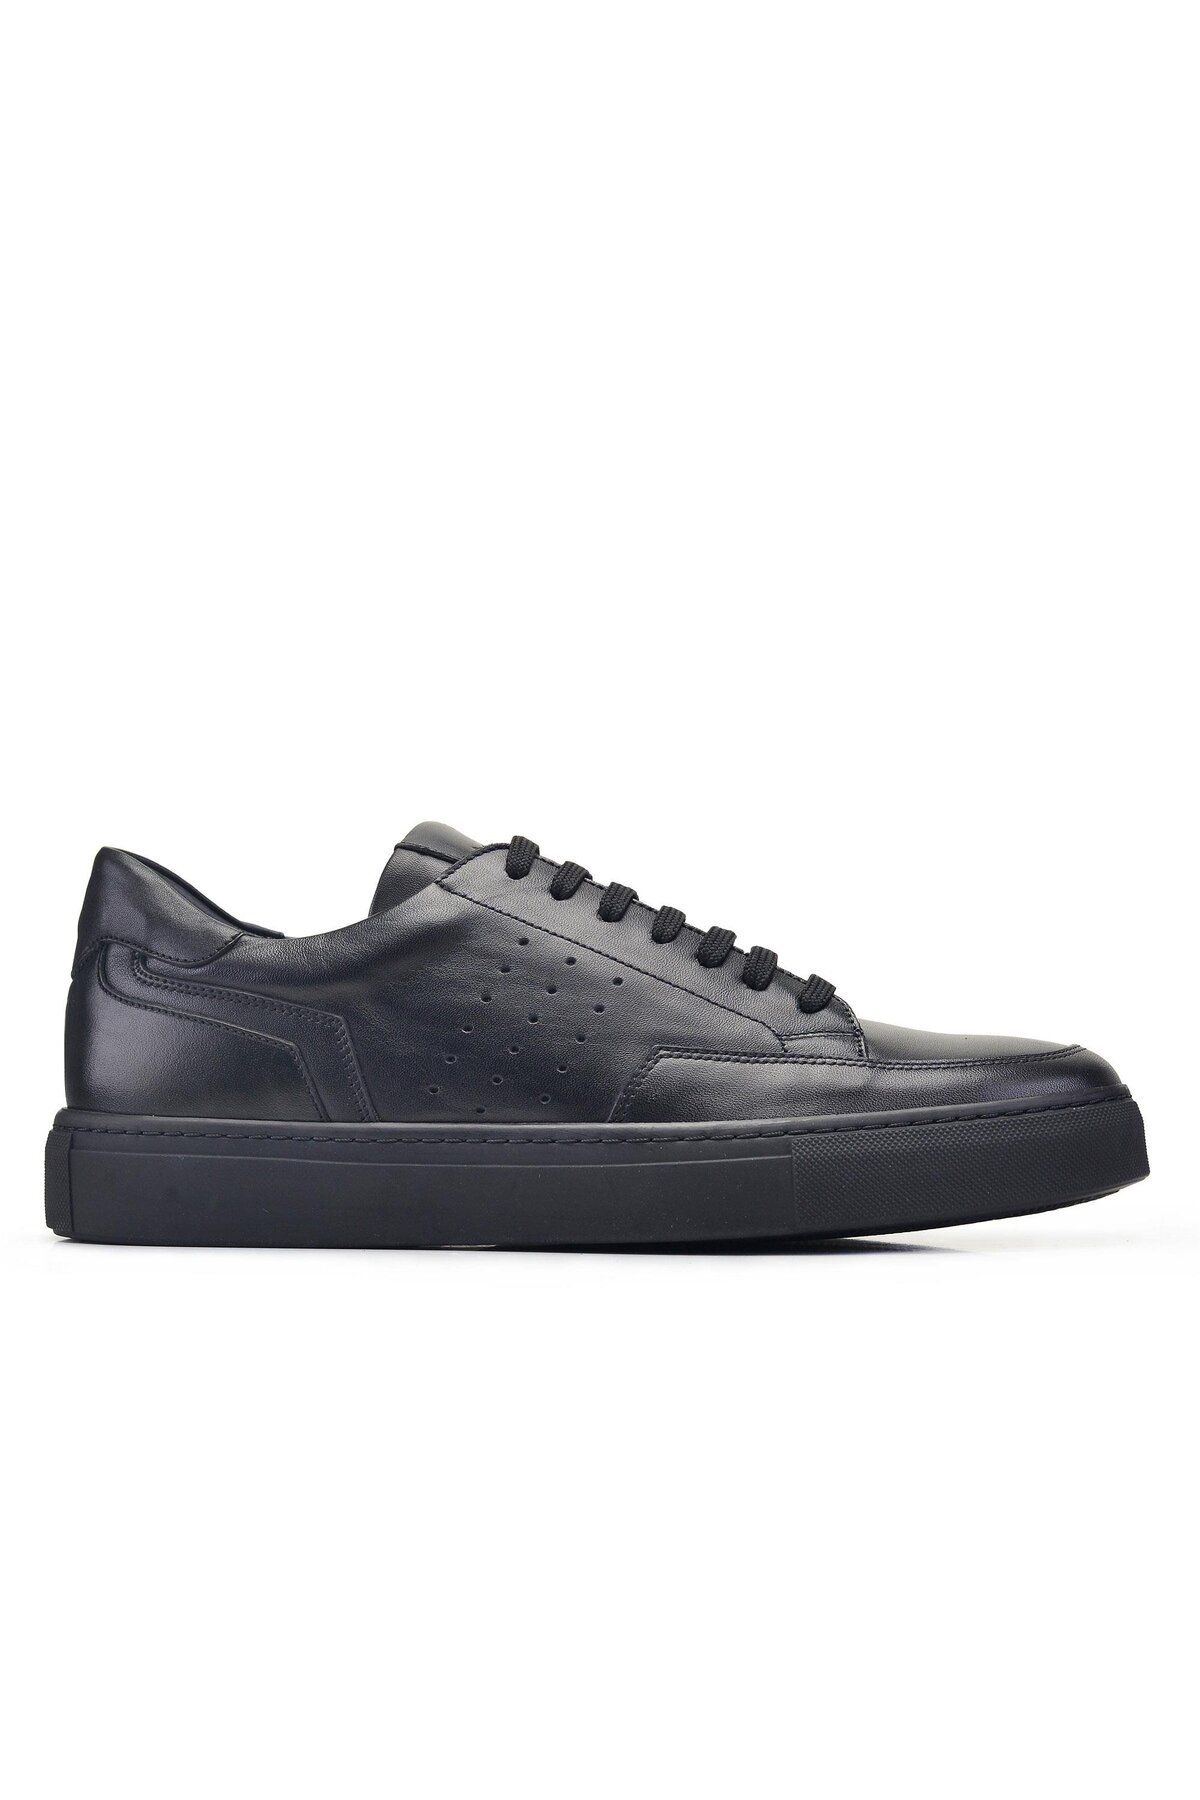 Nevzat Onay Siyah Bağcıklı Sneaker -31221-